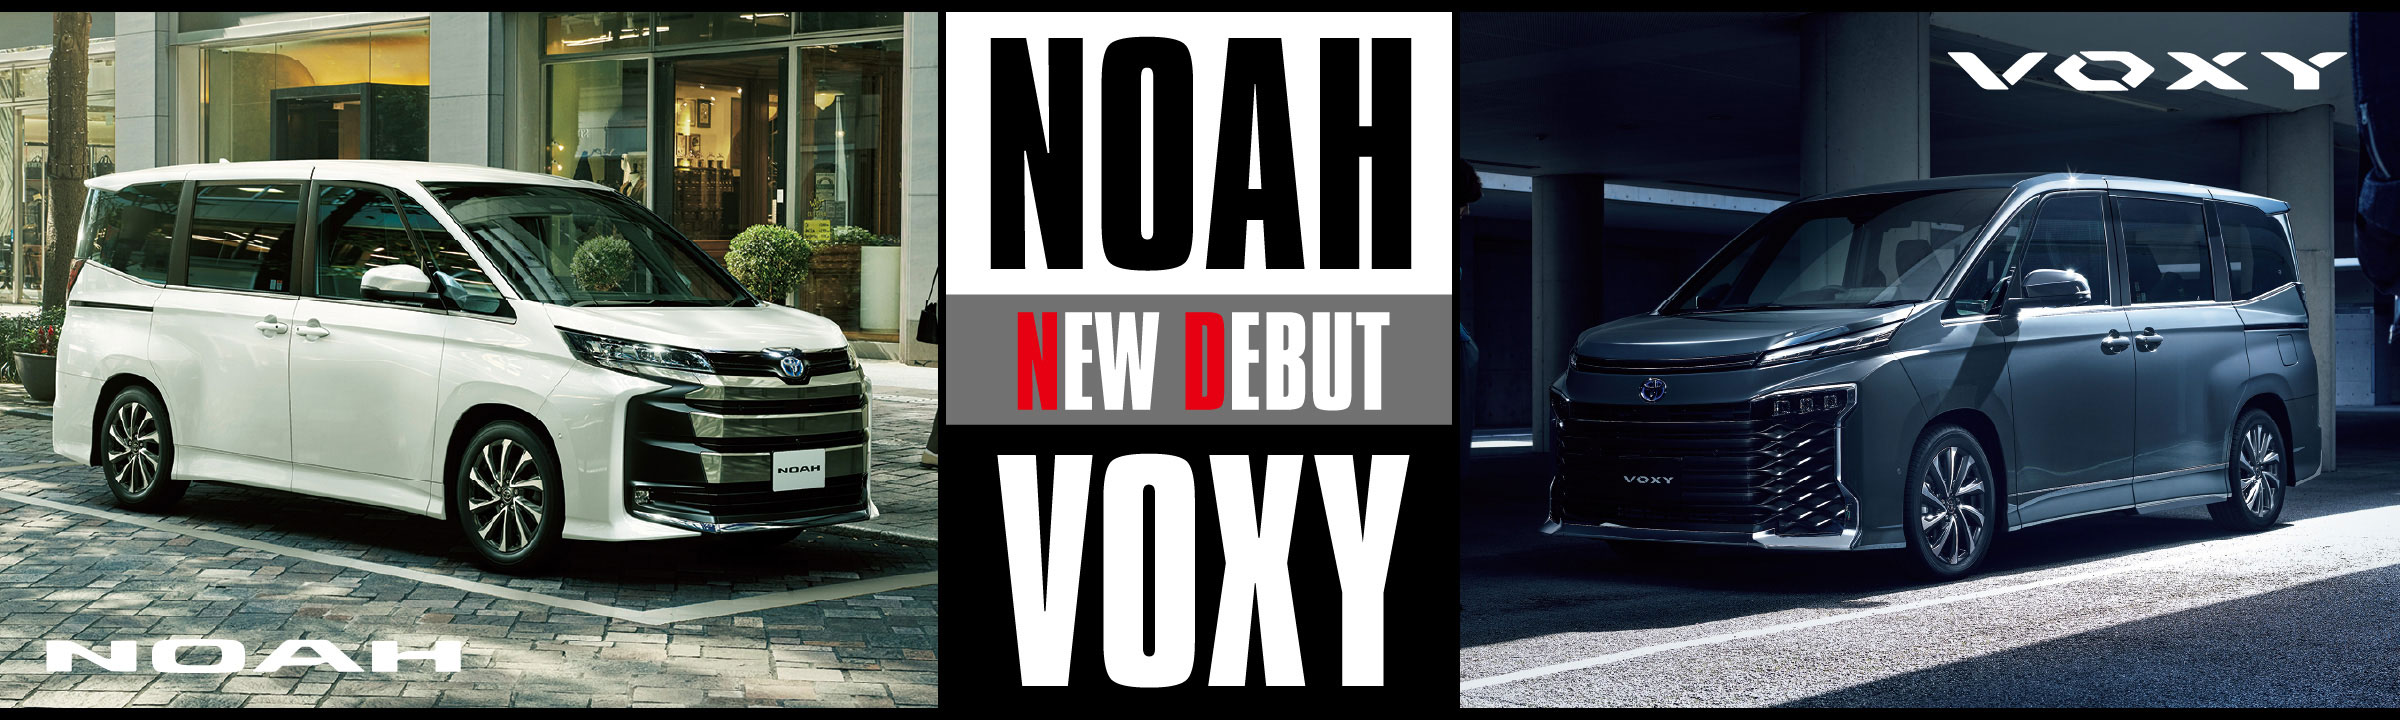 NOAH VOXY NEW DEBUT